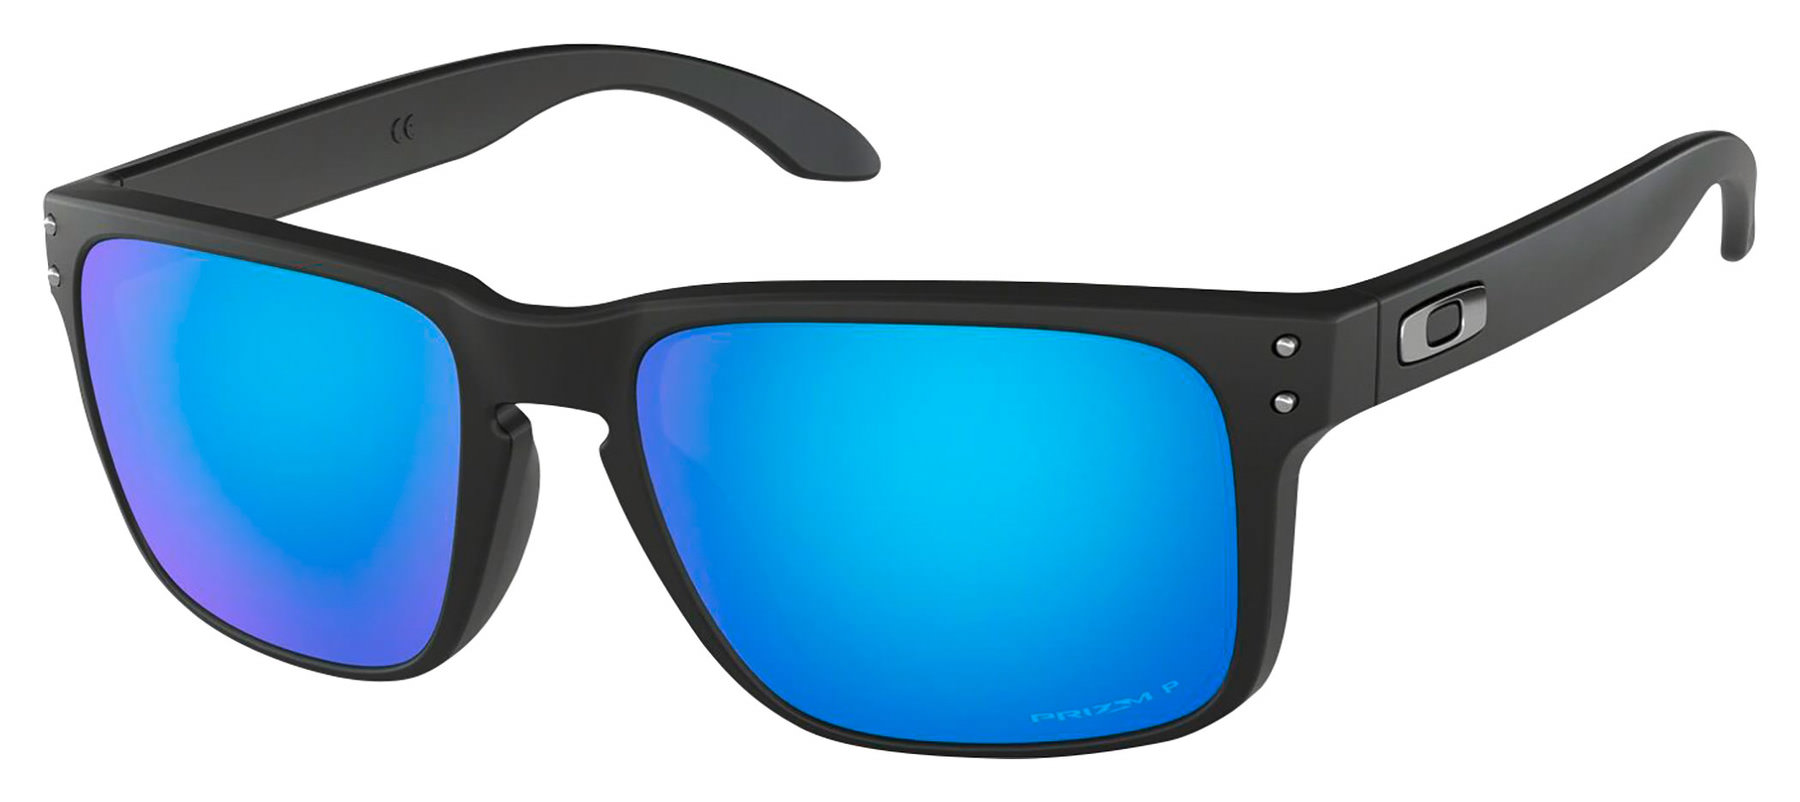 cheap oakley holbrook polarized sunglasses